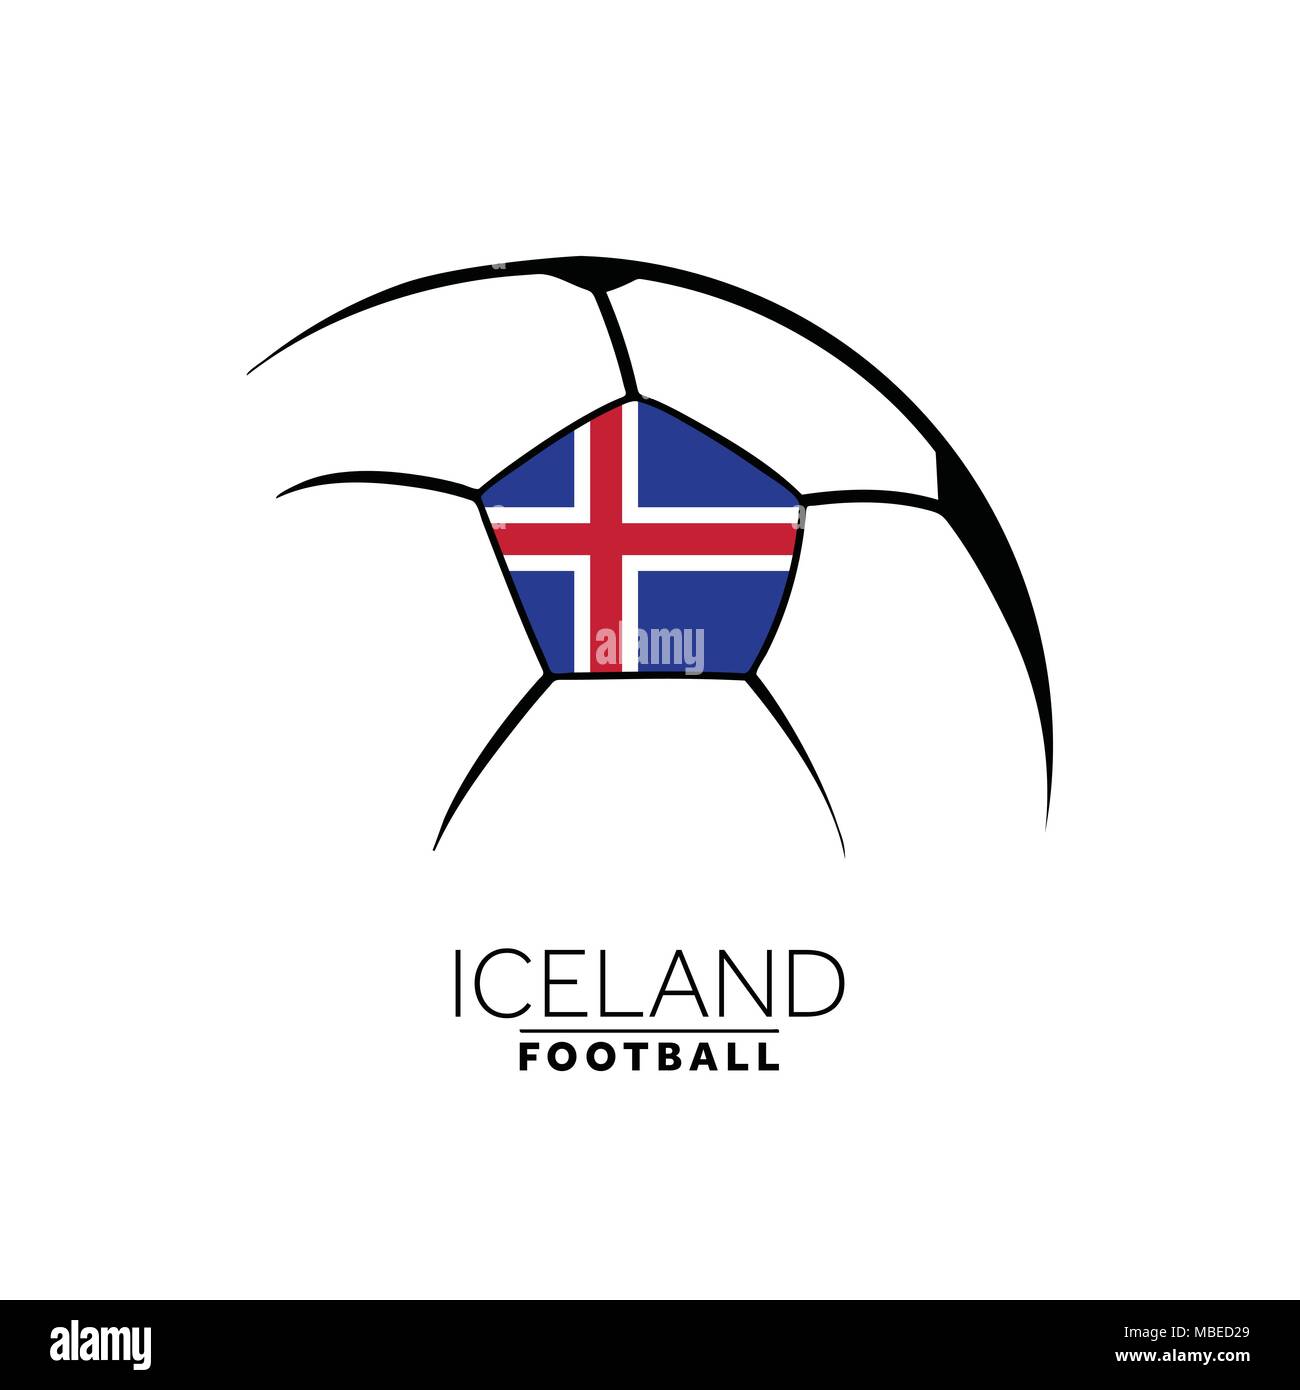 Soccer football minimal design with Iceland flag Stock Vector